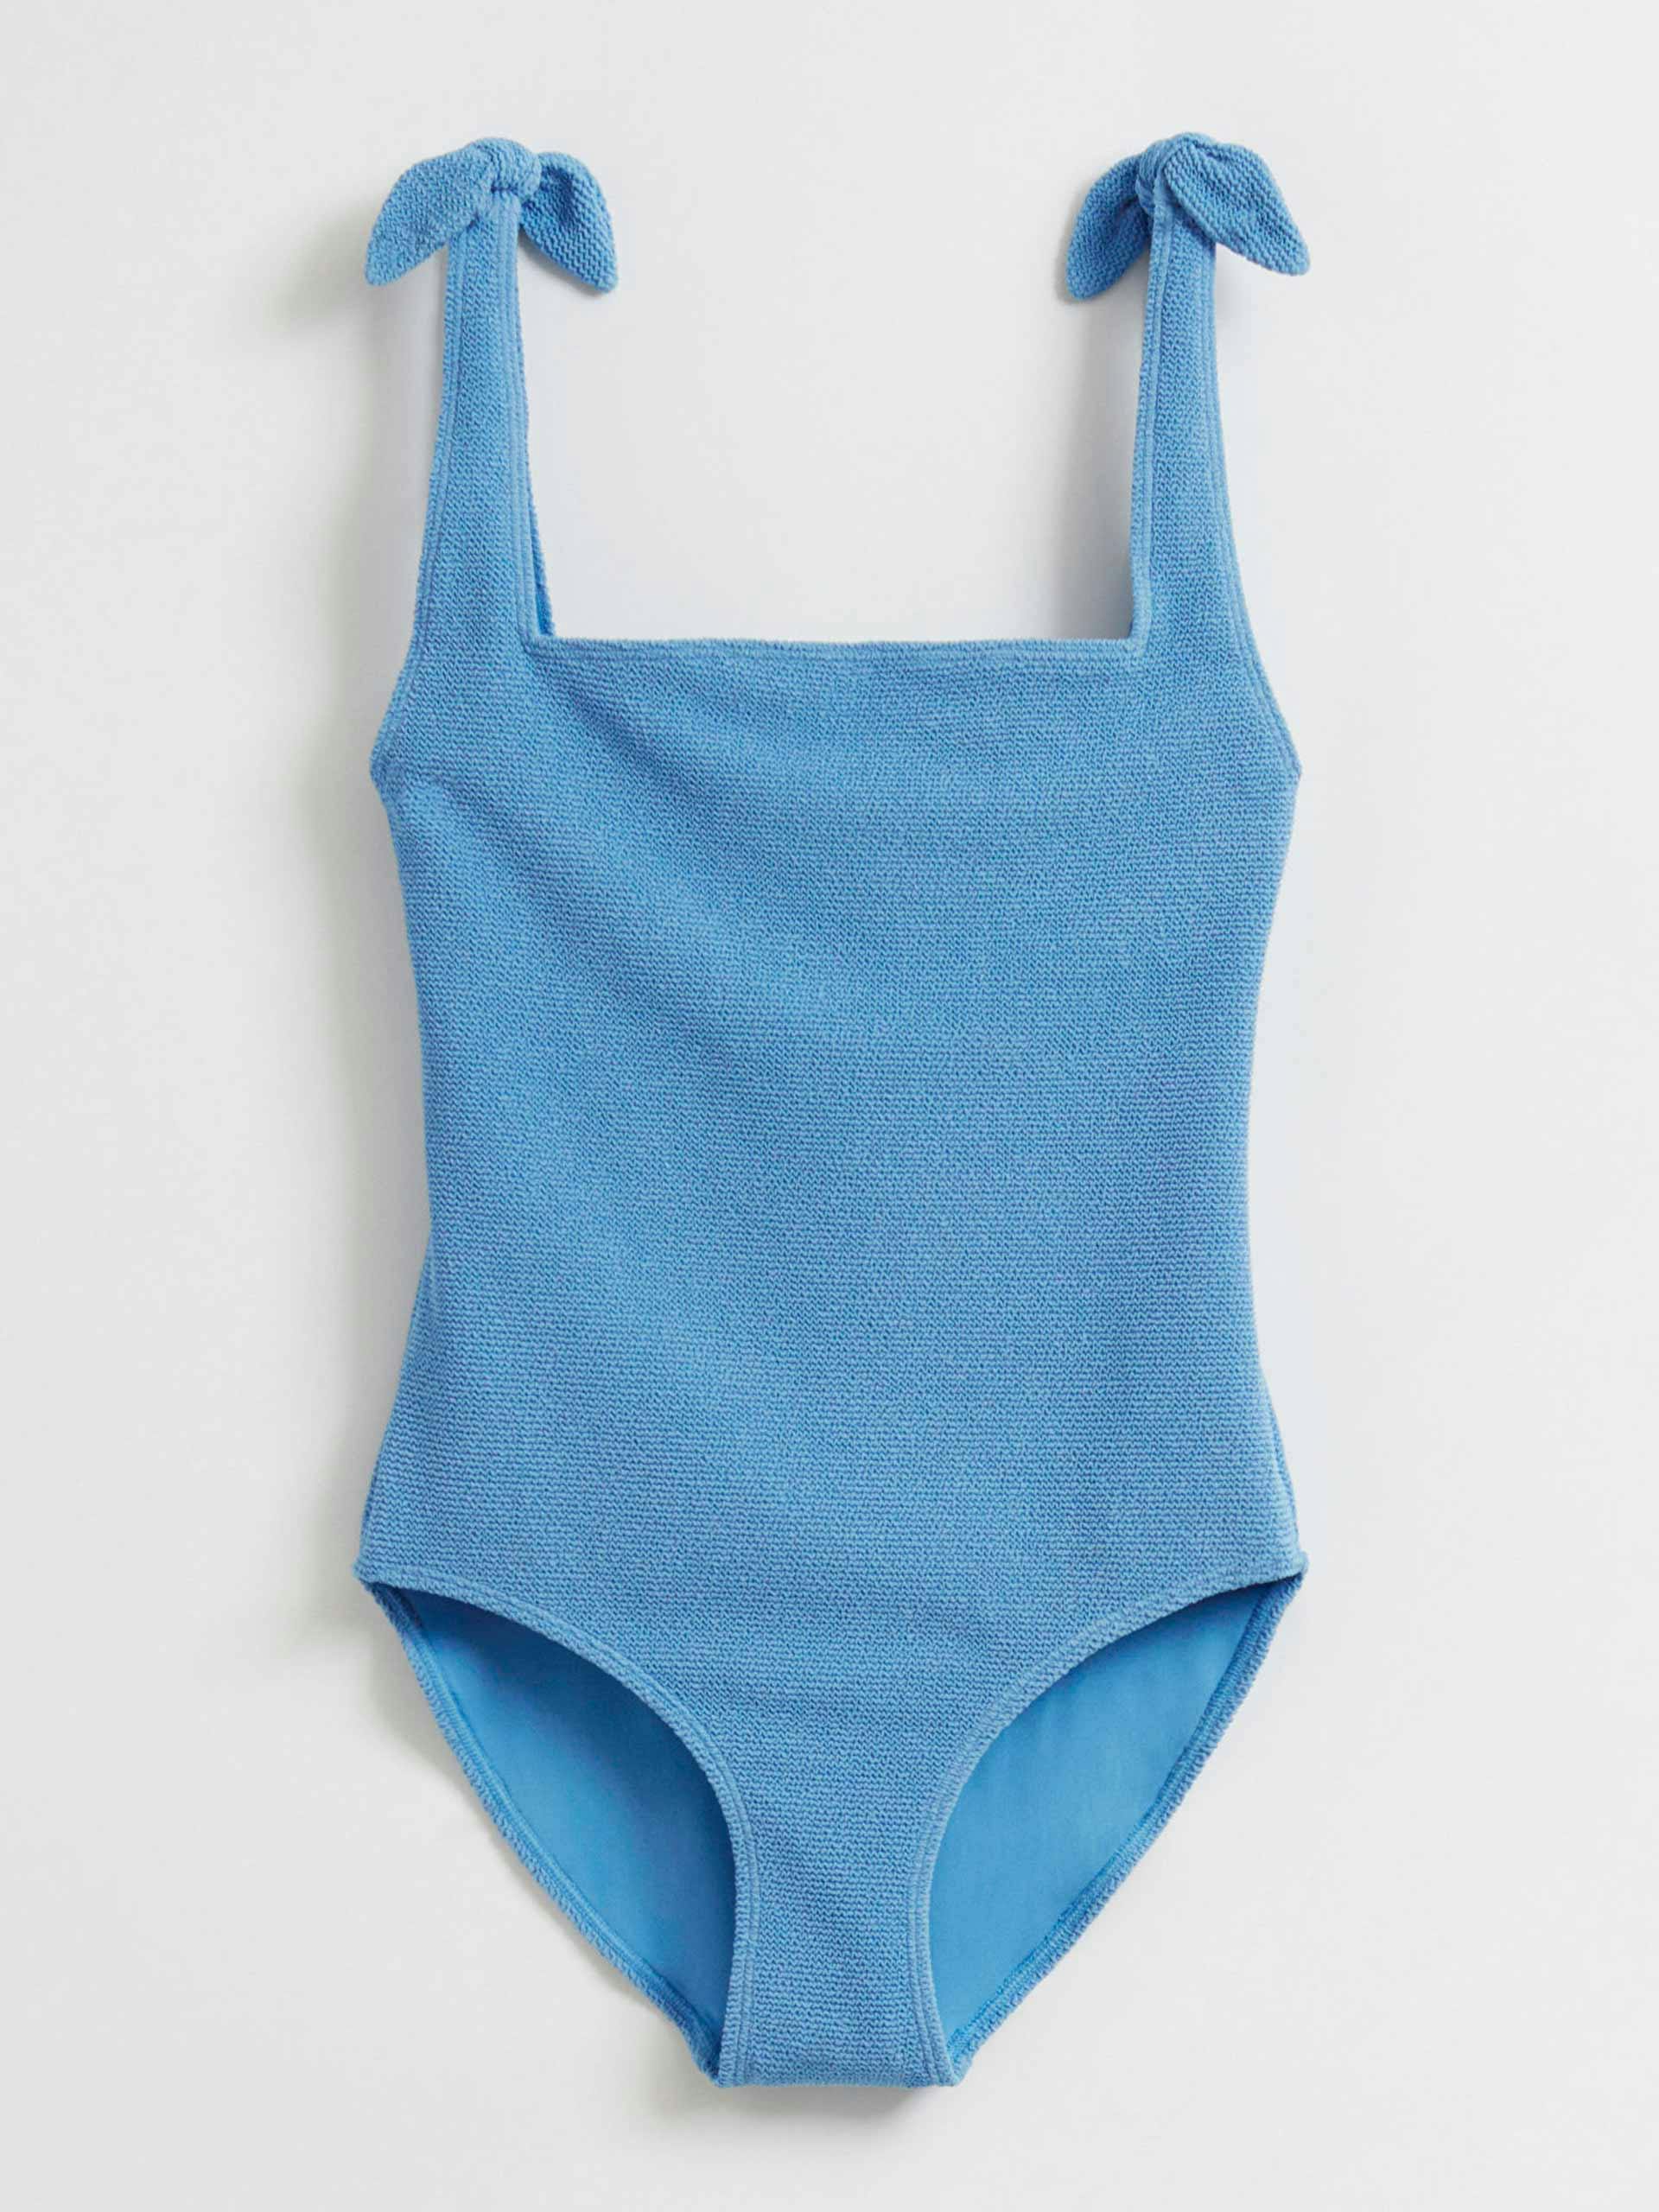 Textured blue swimsuit